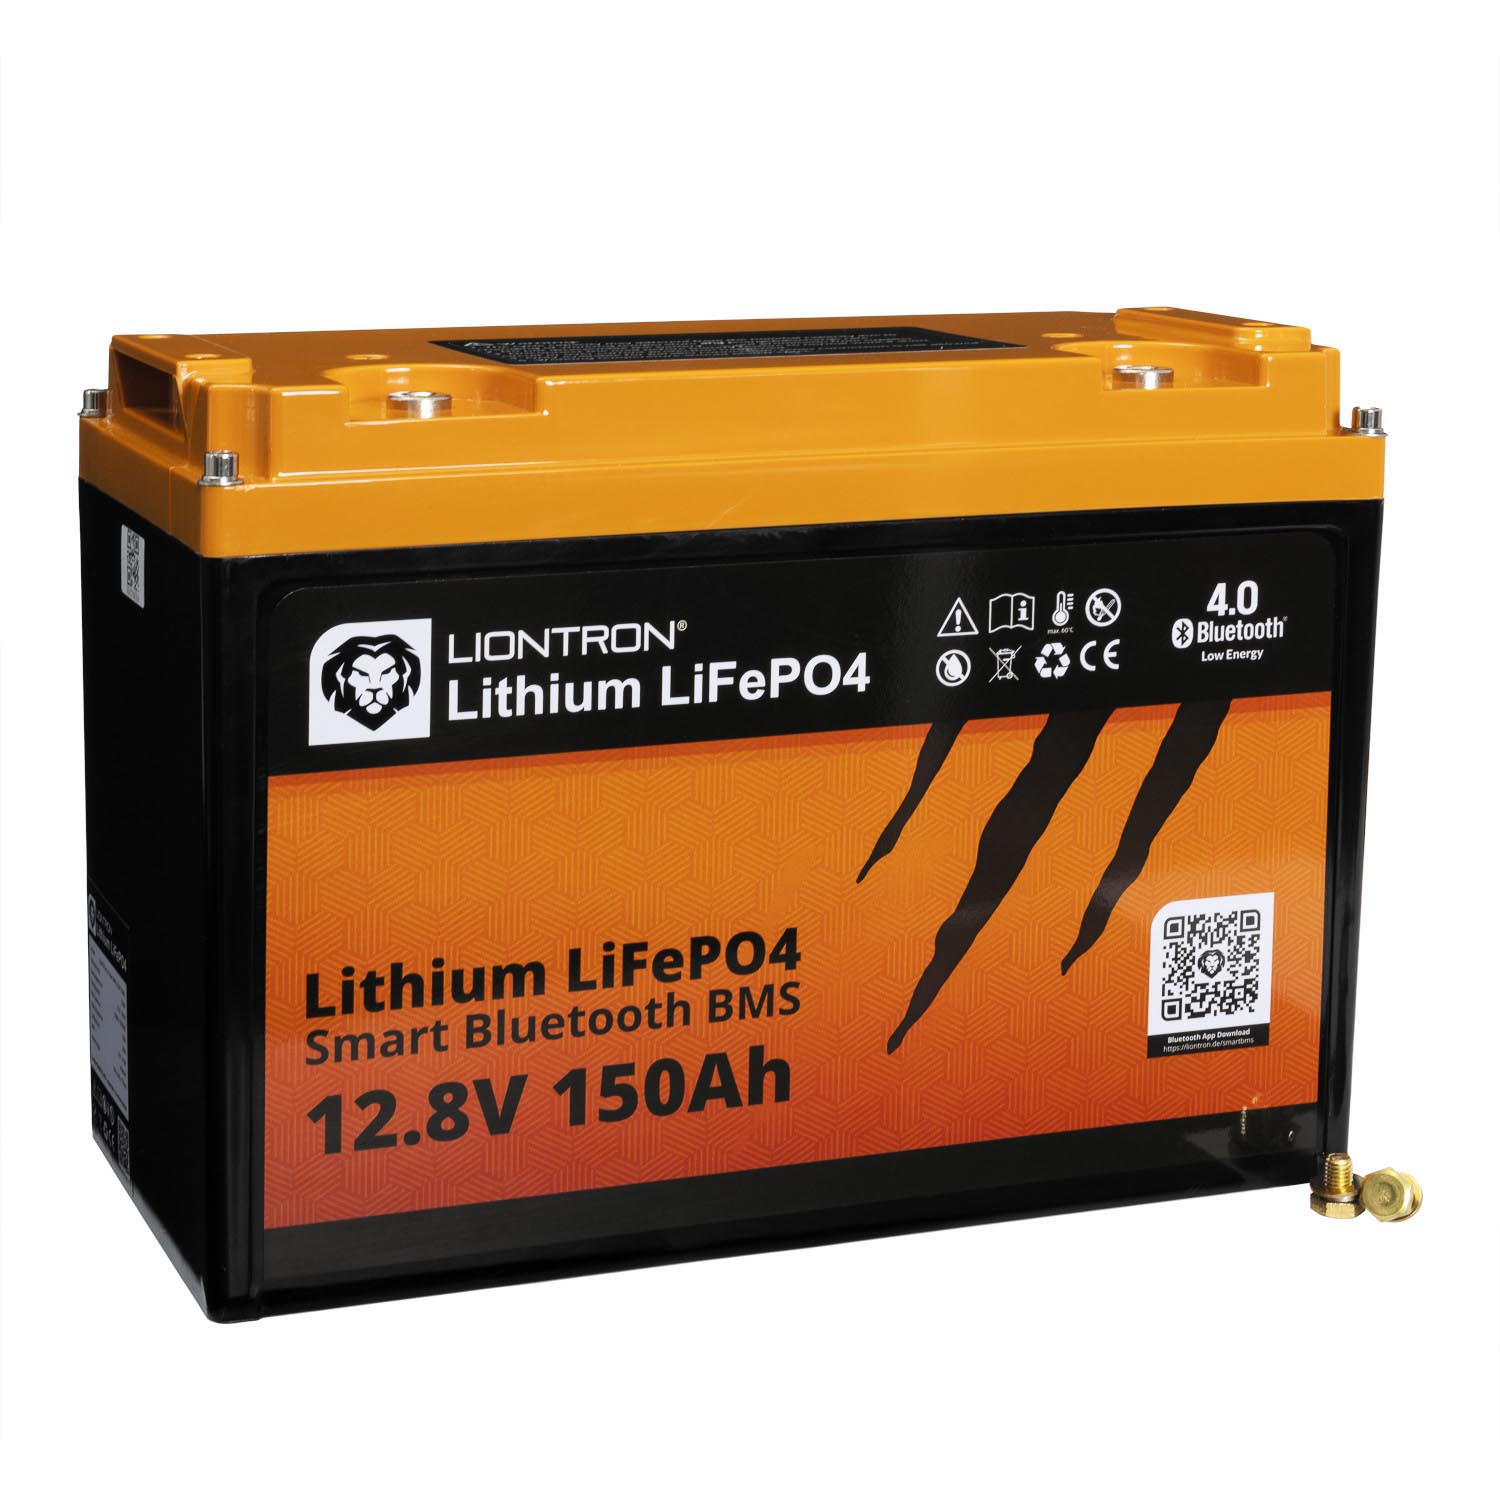 Liontron 150Ah 12V LiFePO4 Lithium Batterie Wohnmobil BMS mit App  (USt-befreit nach §12 Abs.3 Nr. 1 S.1 UStG), 0% MwSt.